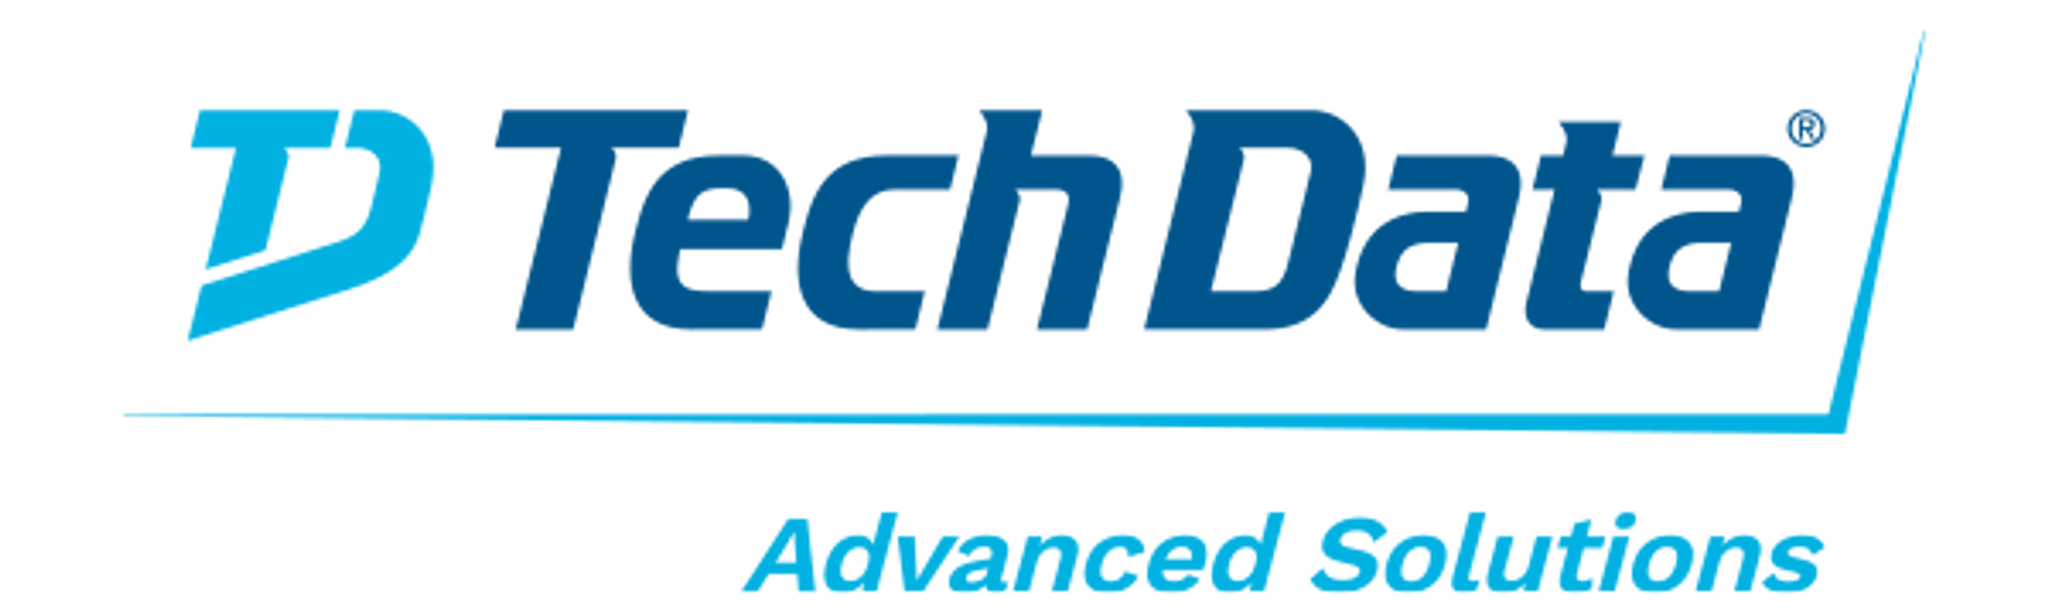 Tech-data Logo